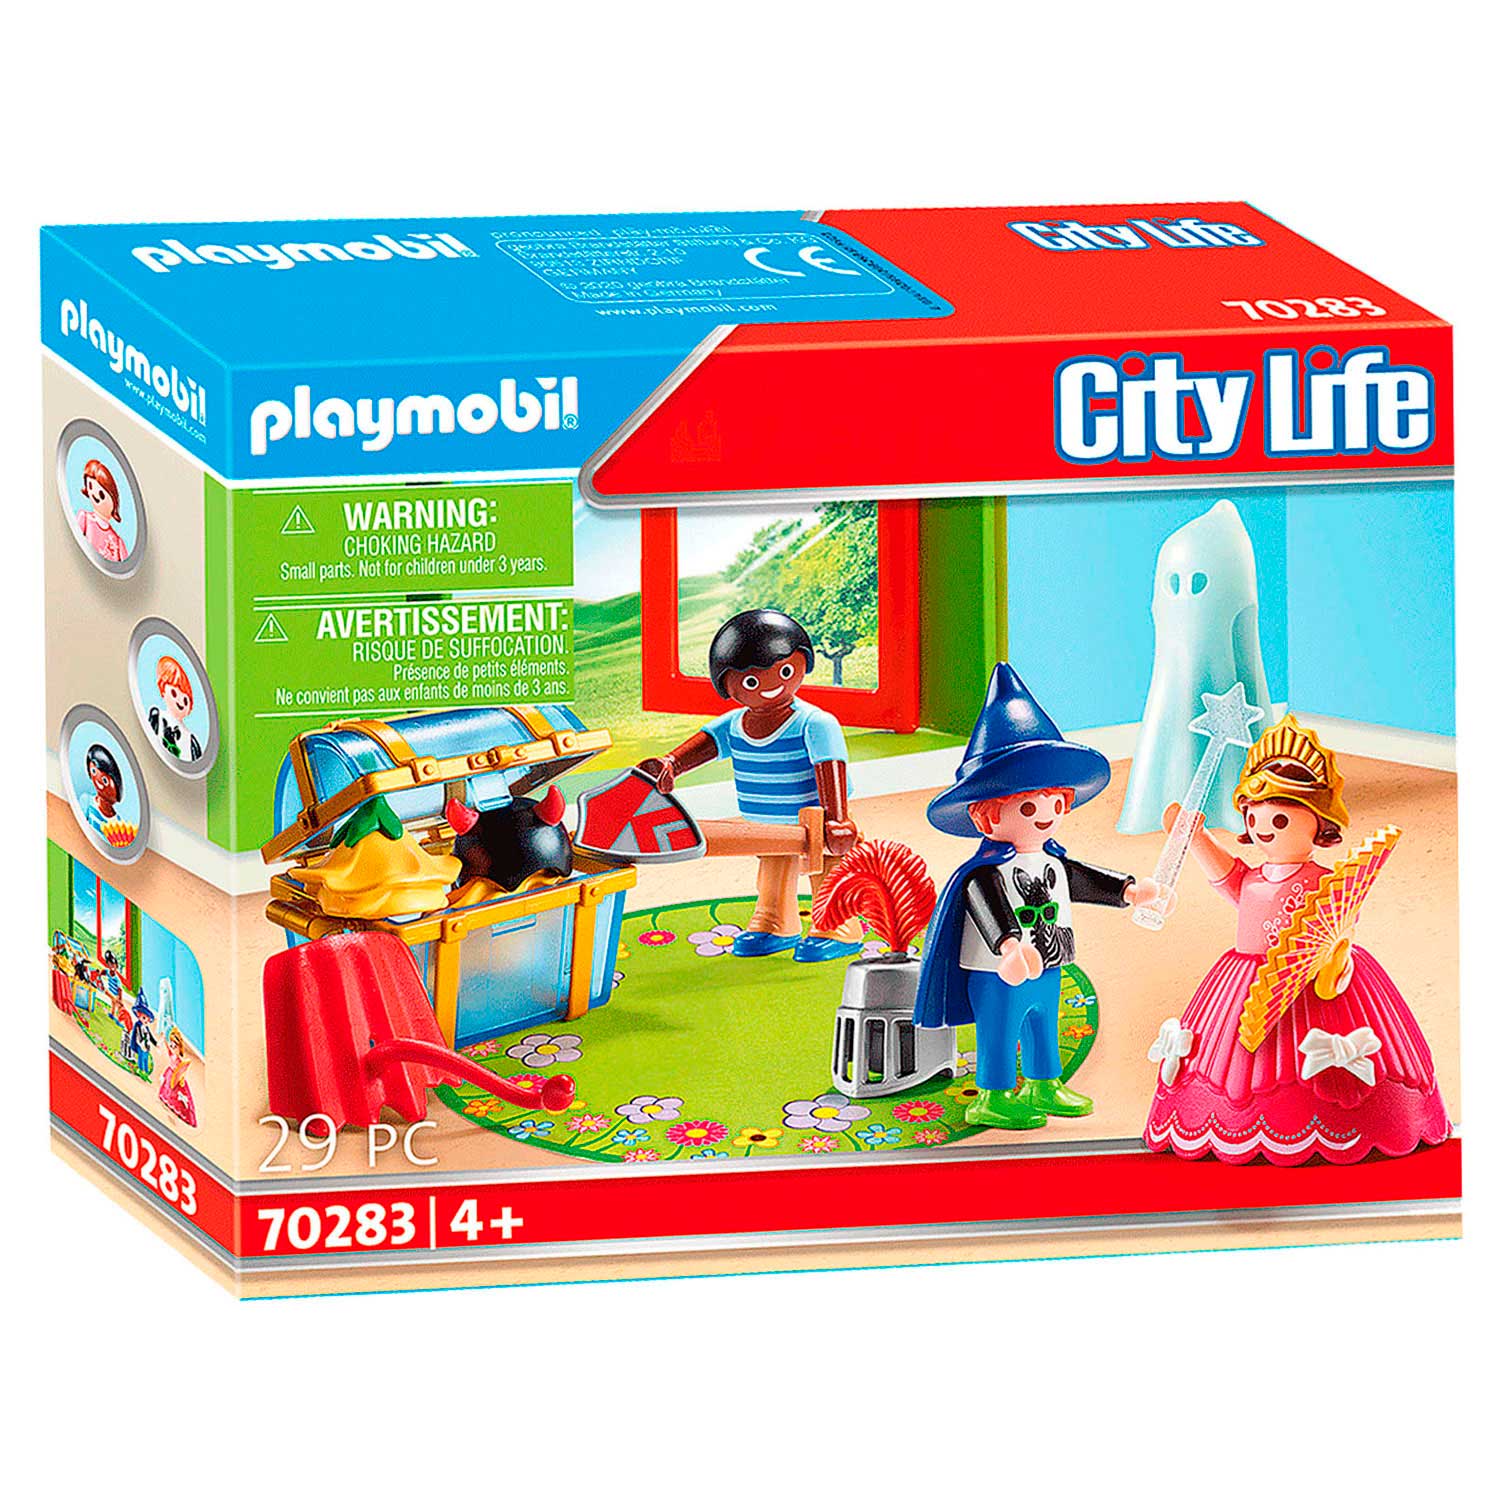 Playmobil City Life Kinder mit Ankleidekoffer - 70283